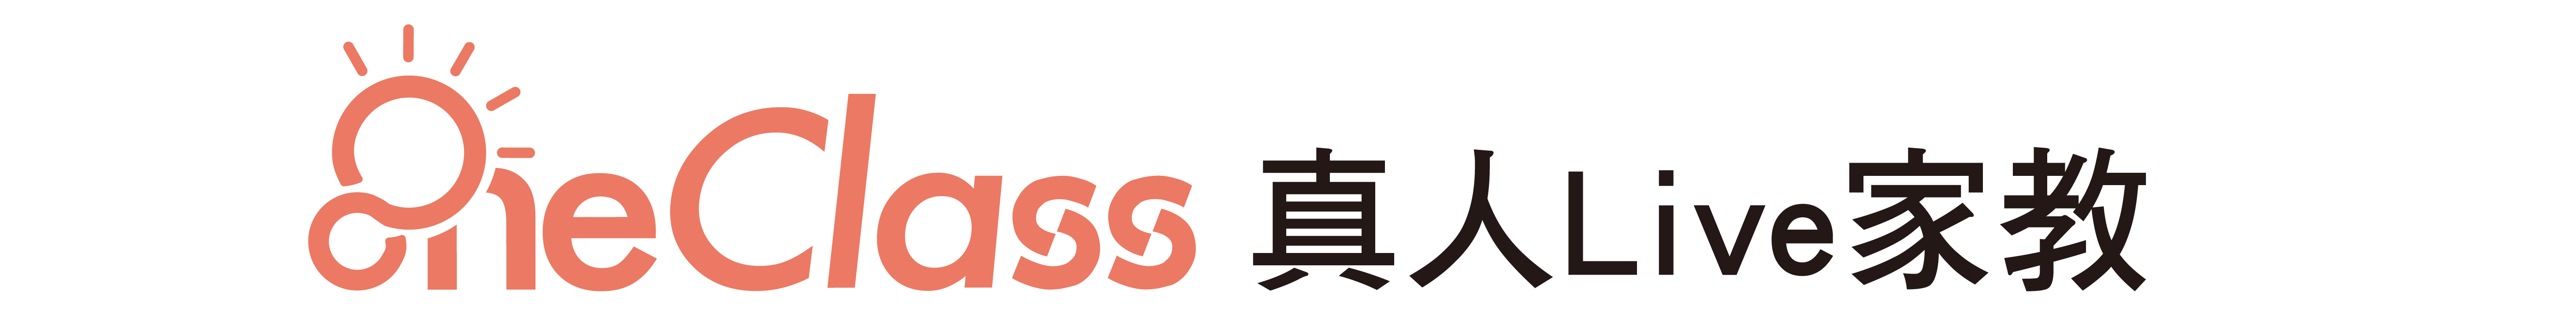 OneClasslive logo